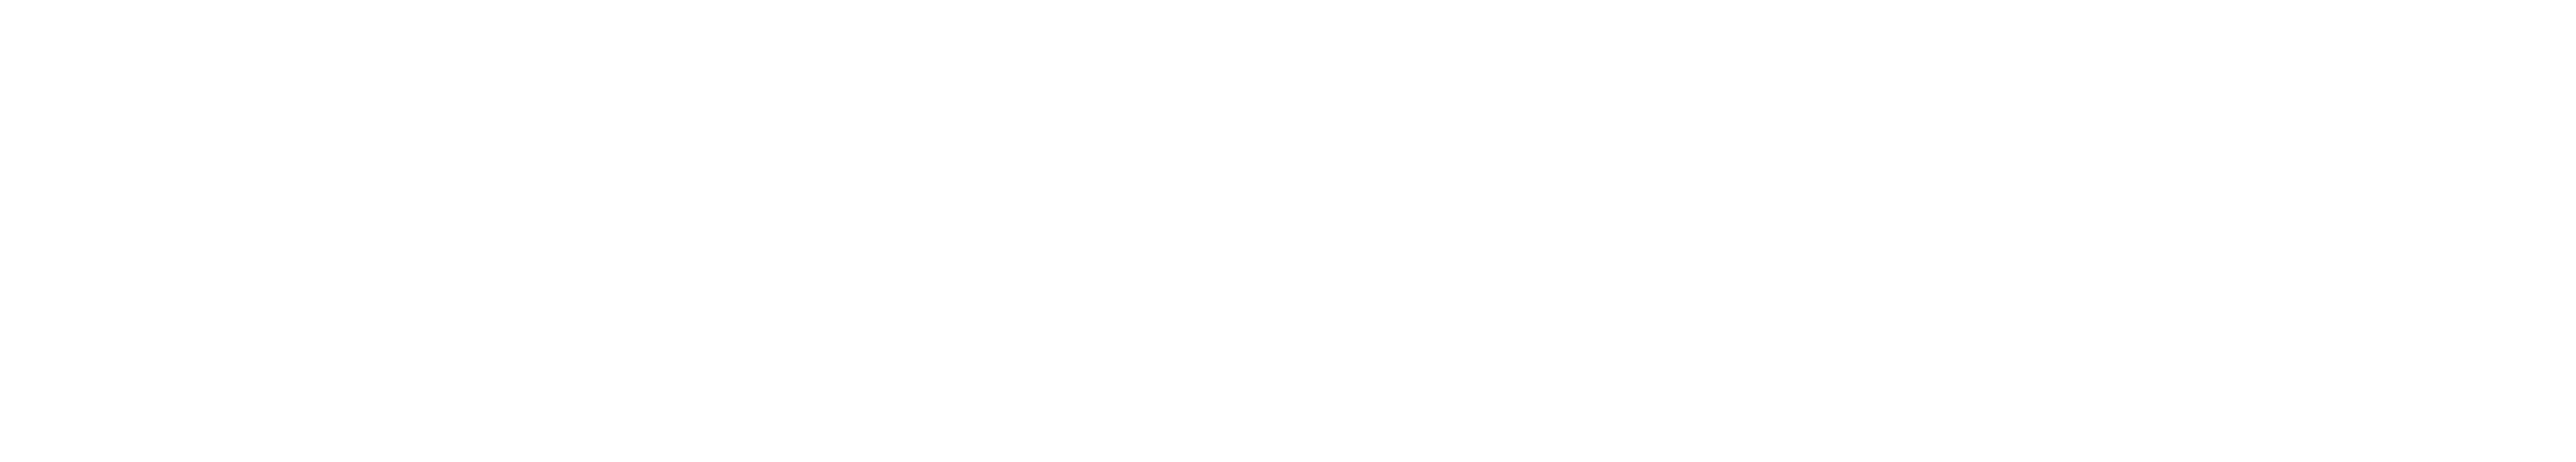 3R Revenue Assurance Solution Limited